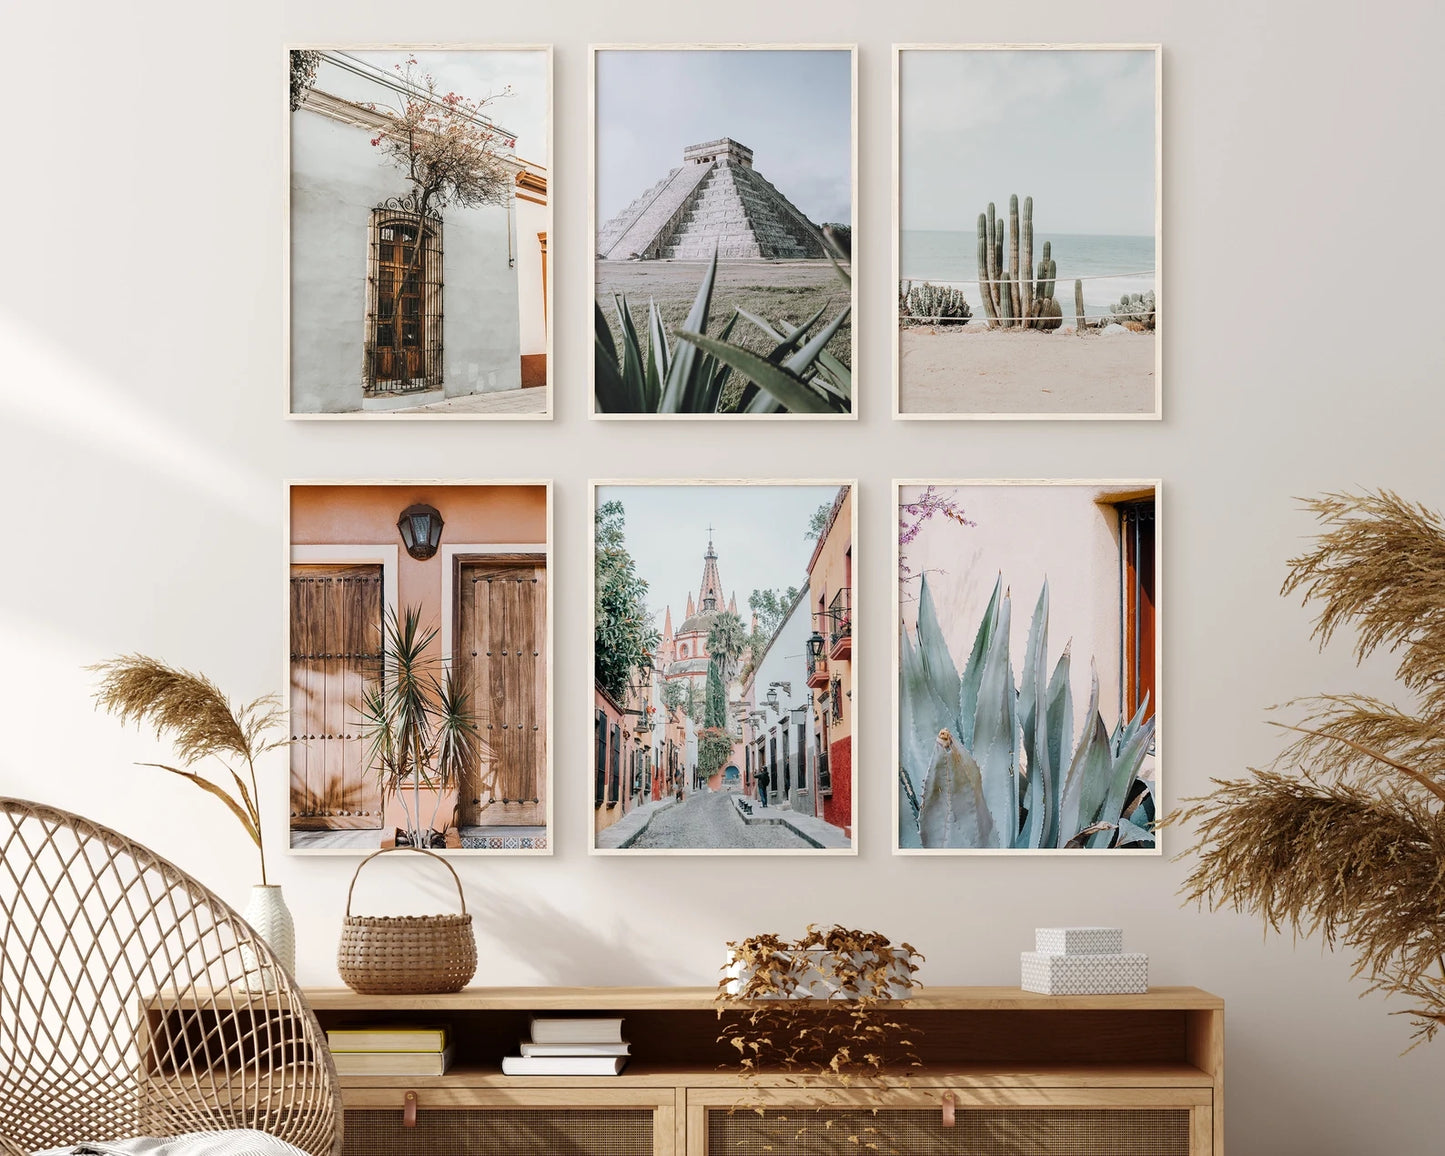 Mexico Cactus Photography Set of 6 Prints